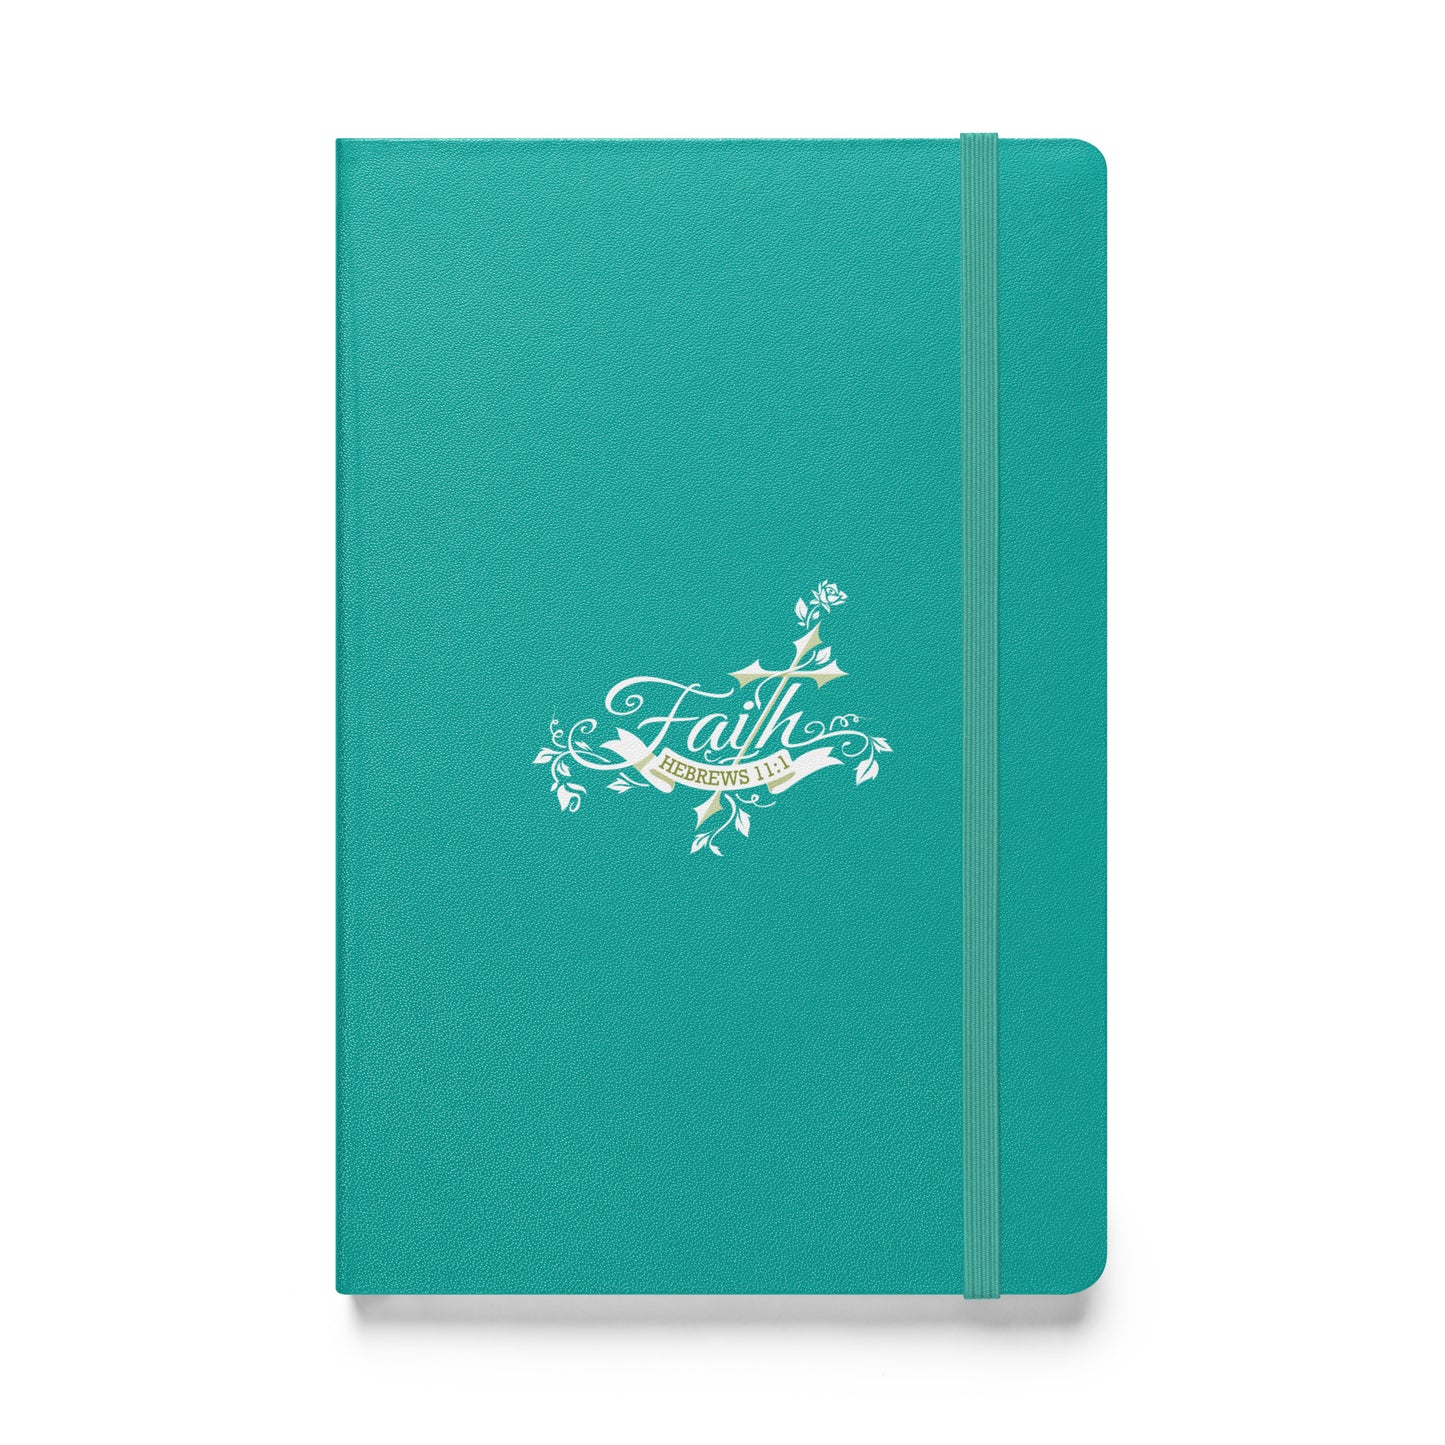 Faith - Hardcover bound notebook